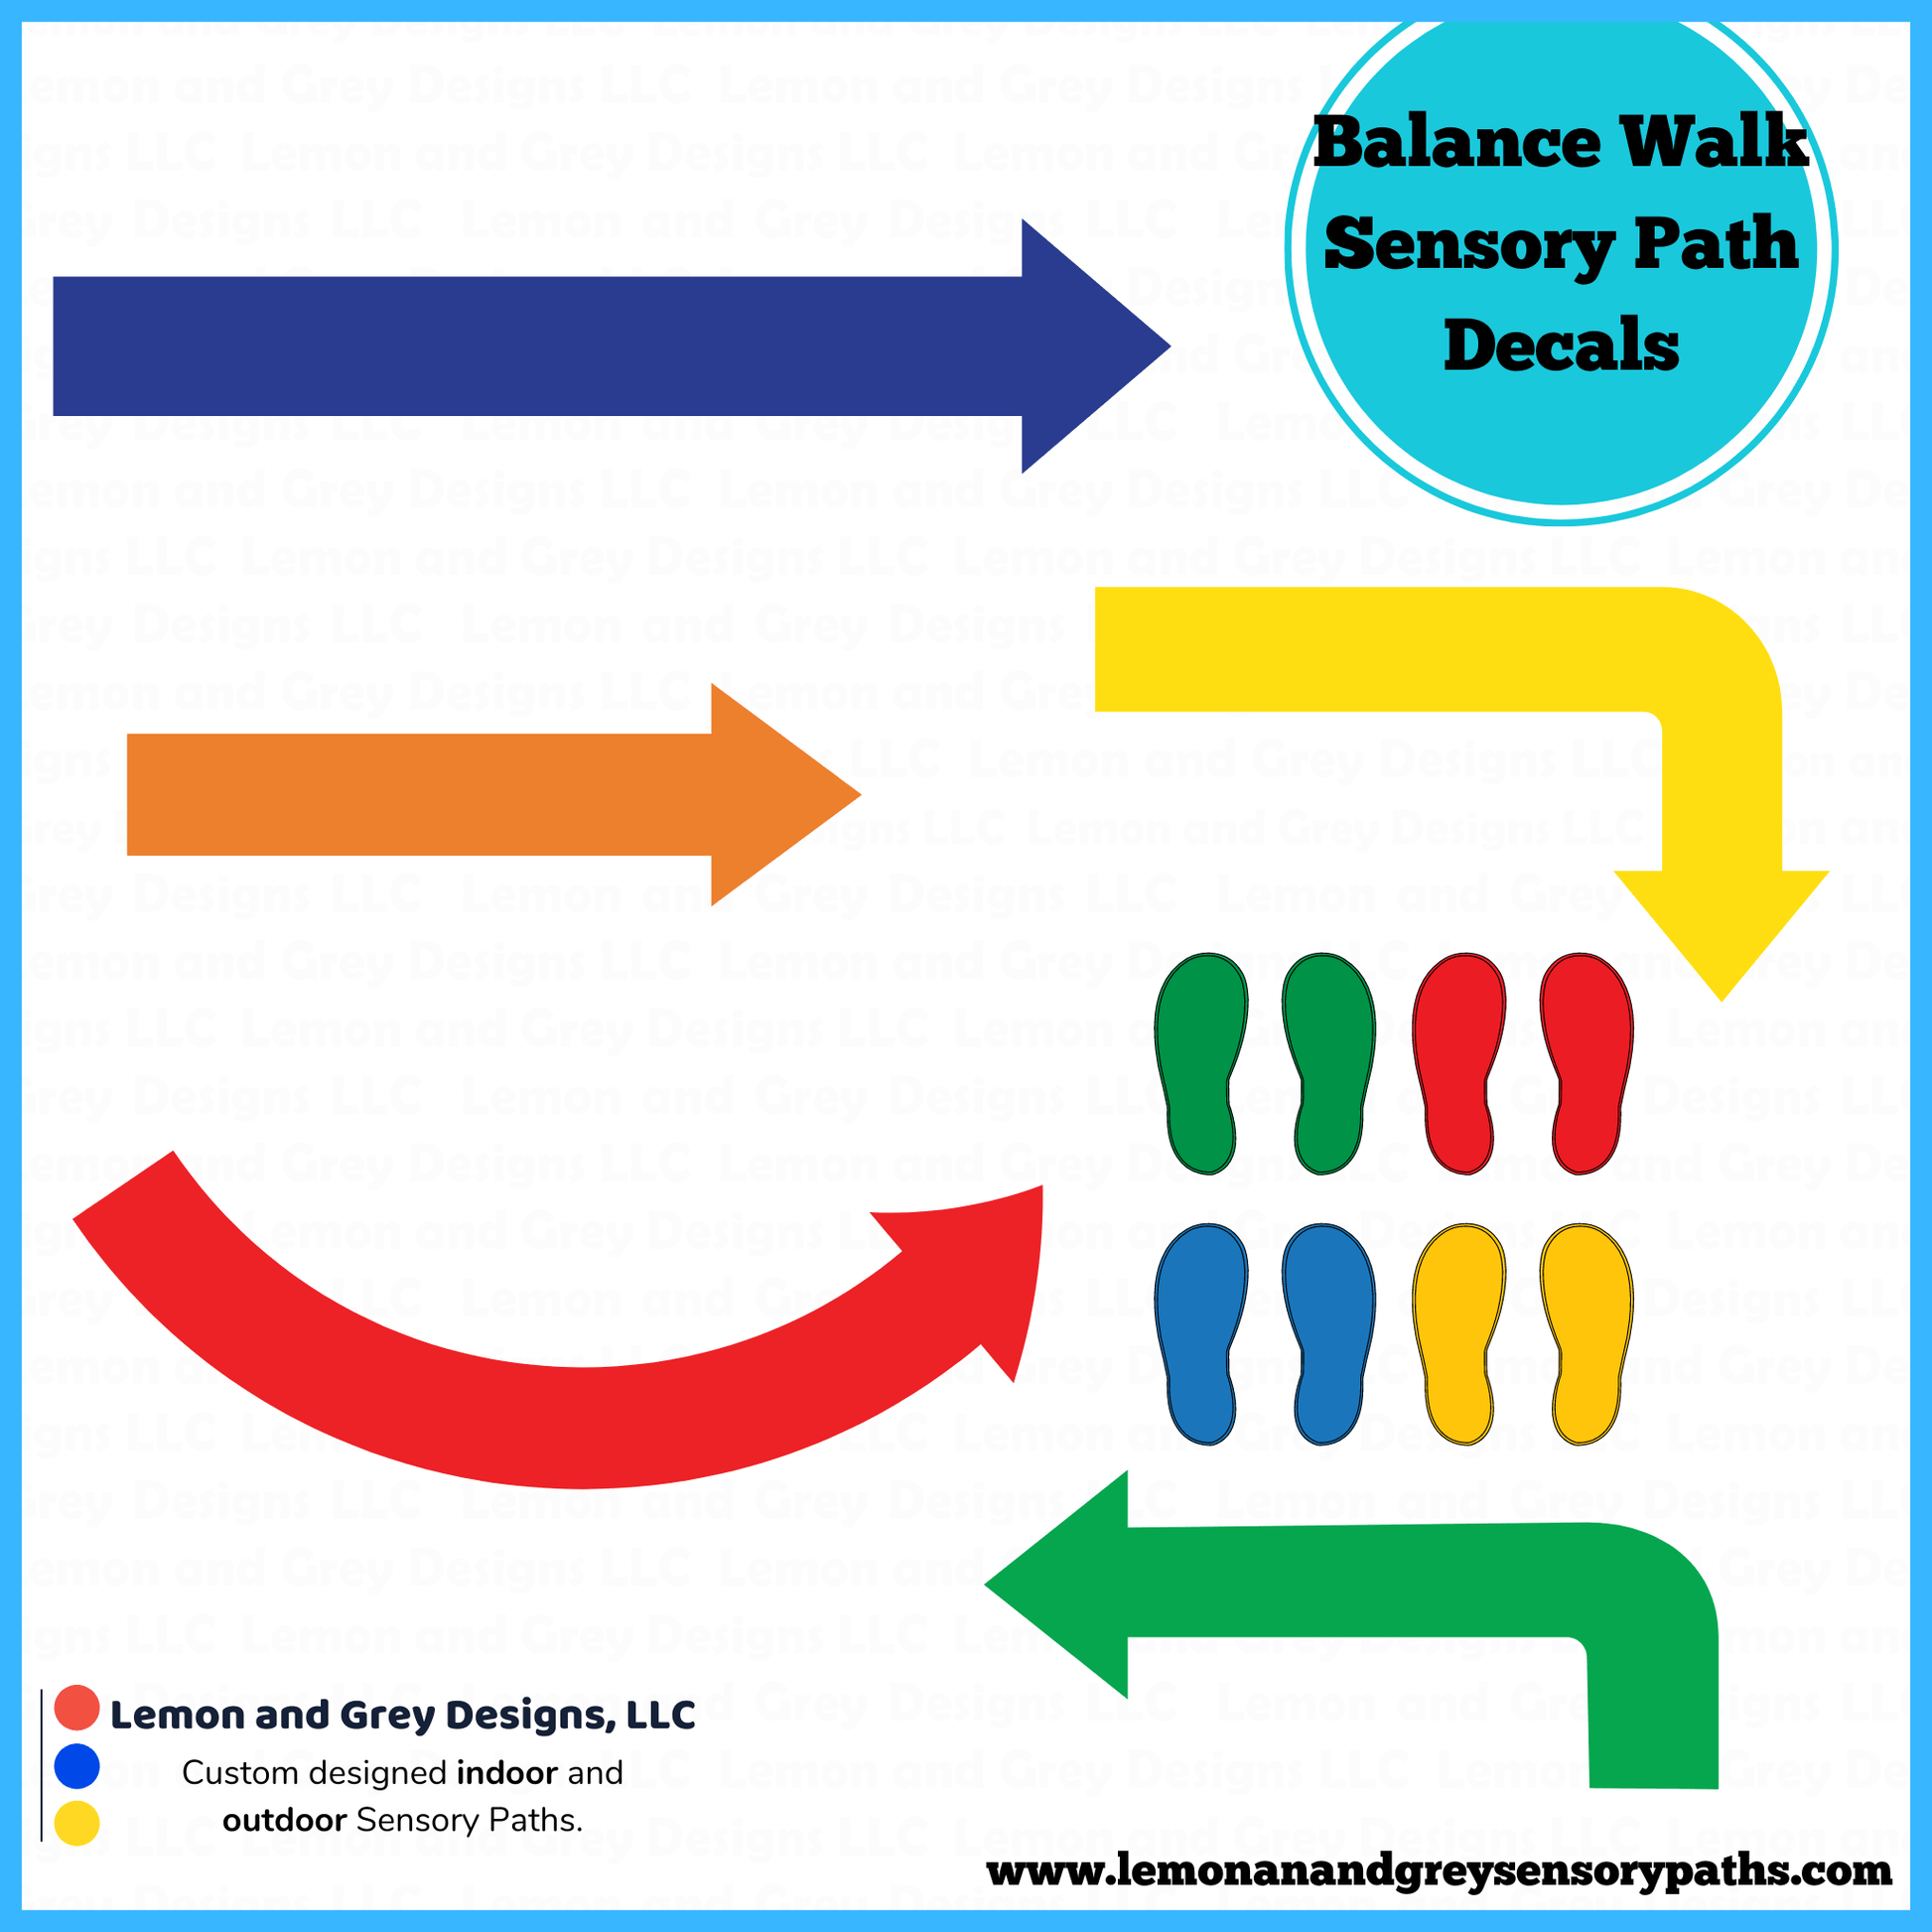 Balance Walk Sensory Path Decals